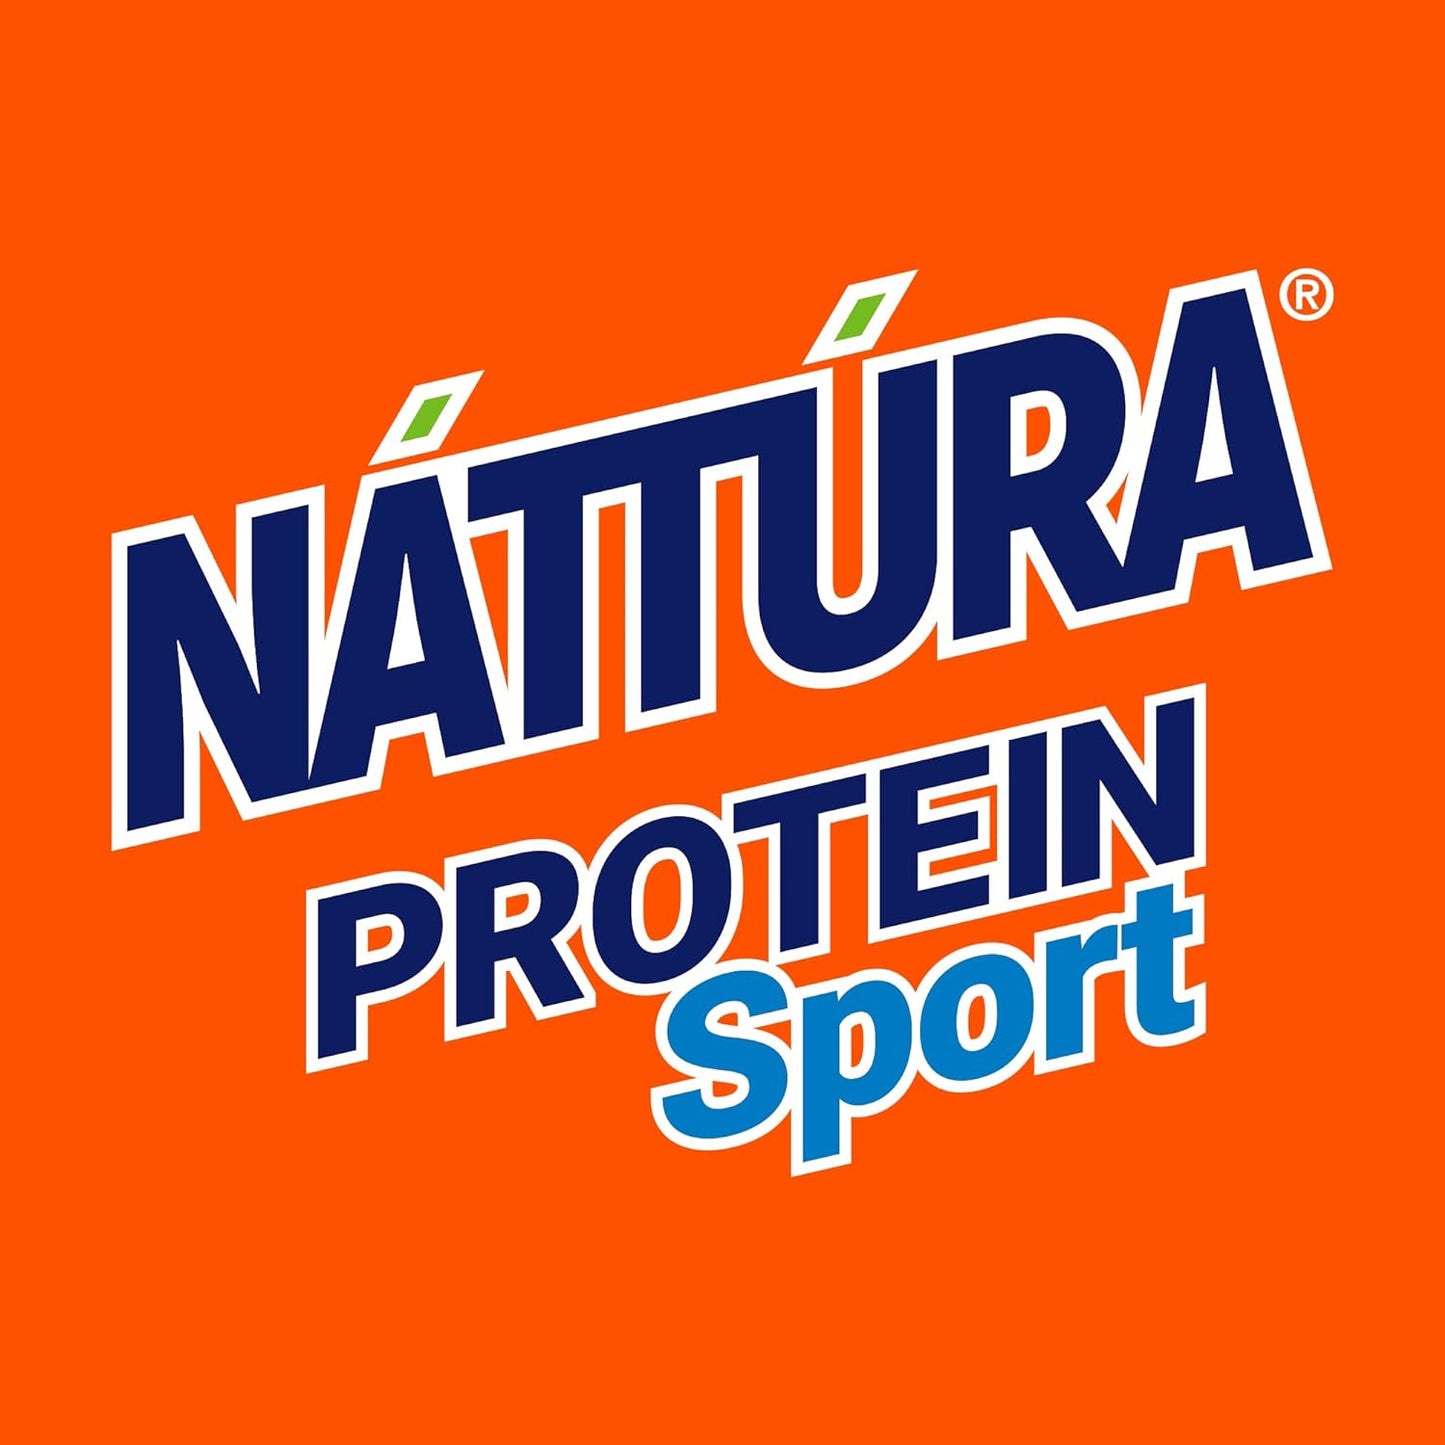 NATTURA PROTEIN SPORT Gallette, Snack Salati Senza Glutine, Gallette di Mais per Sportivi, Gallette Bio Vegane, 23% di Proteine, 100g